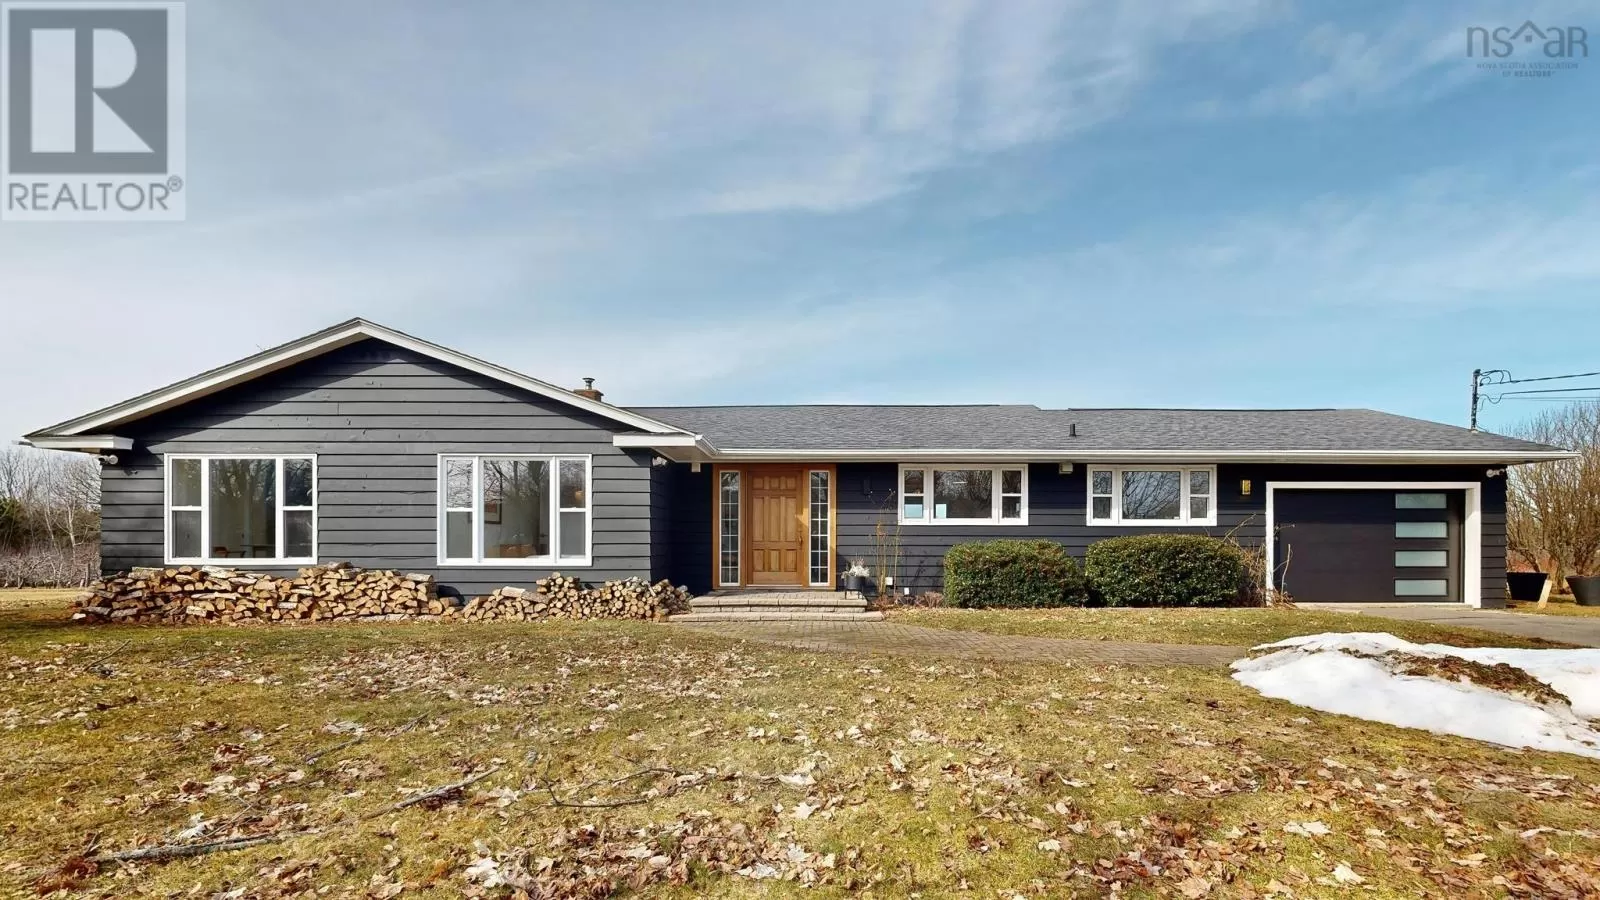 House for rent: 10165 1 Highway, Greenwich, Nova Scotia B4P 2R2